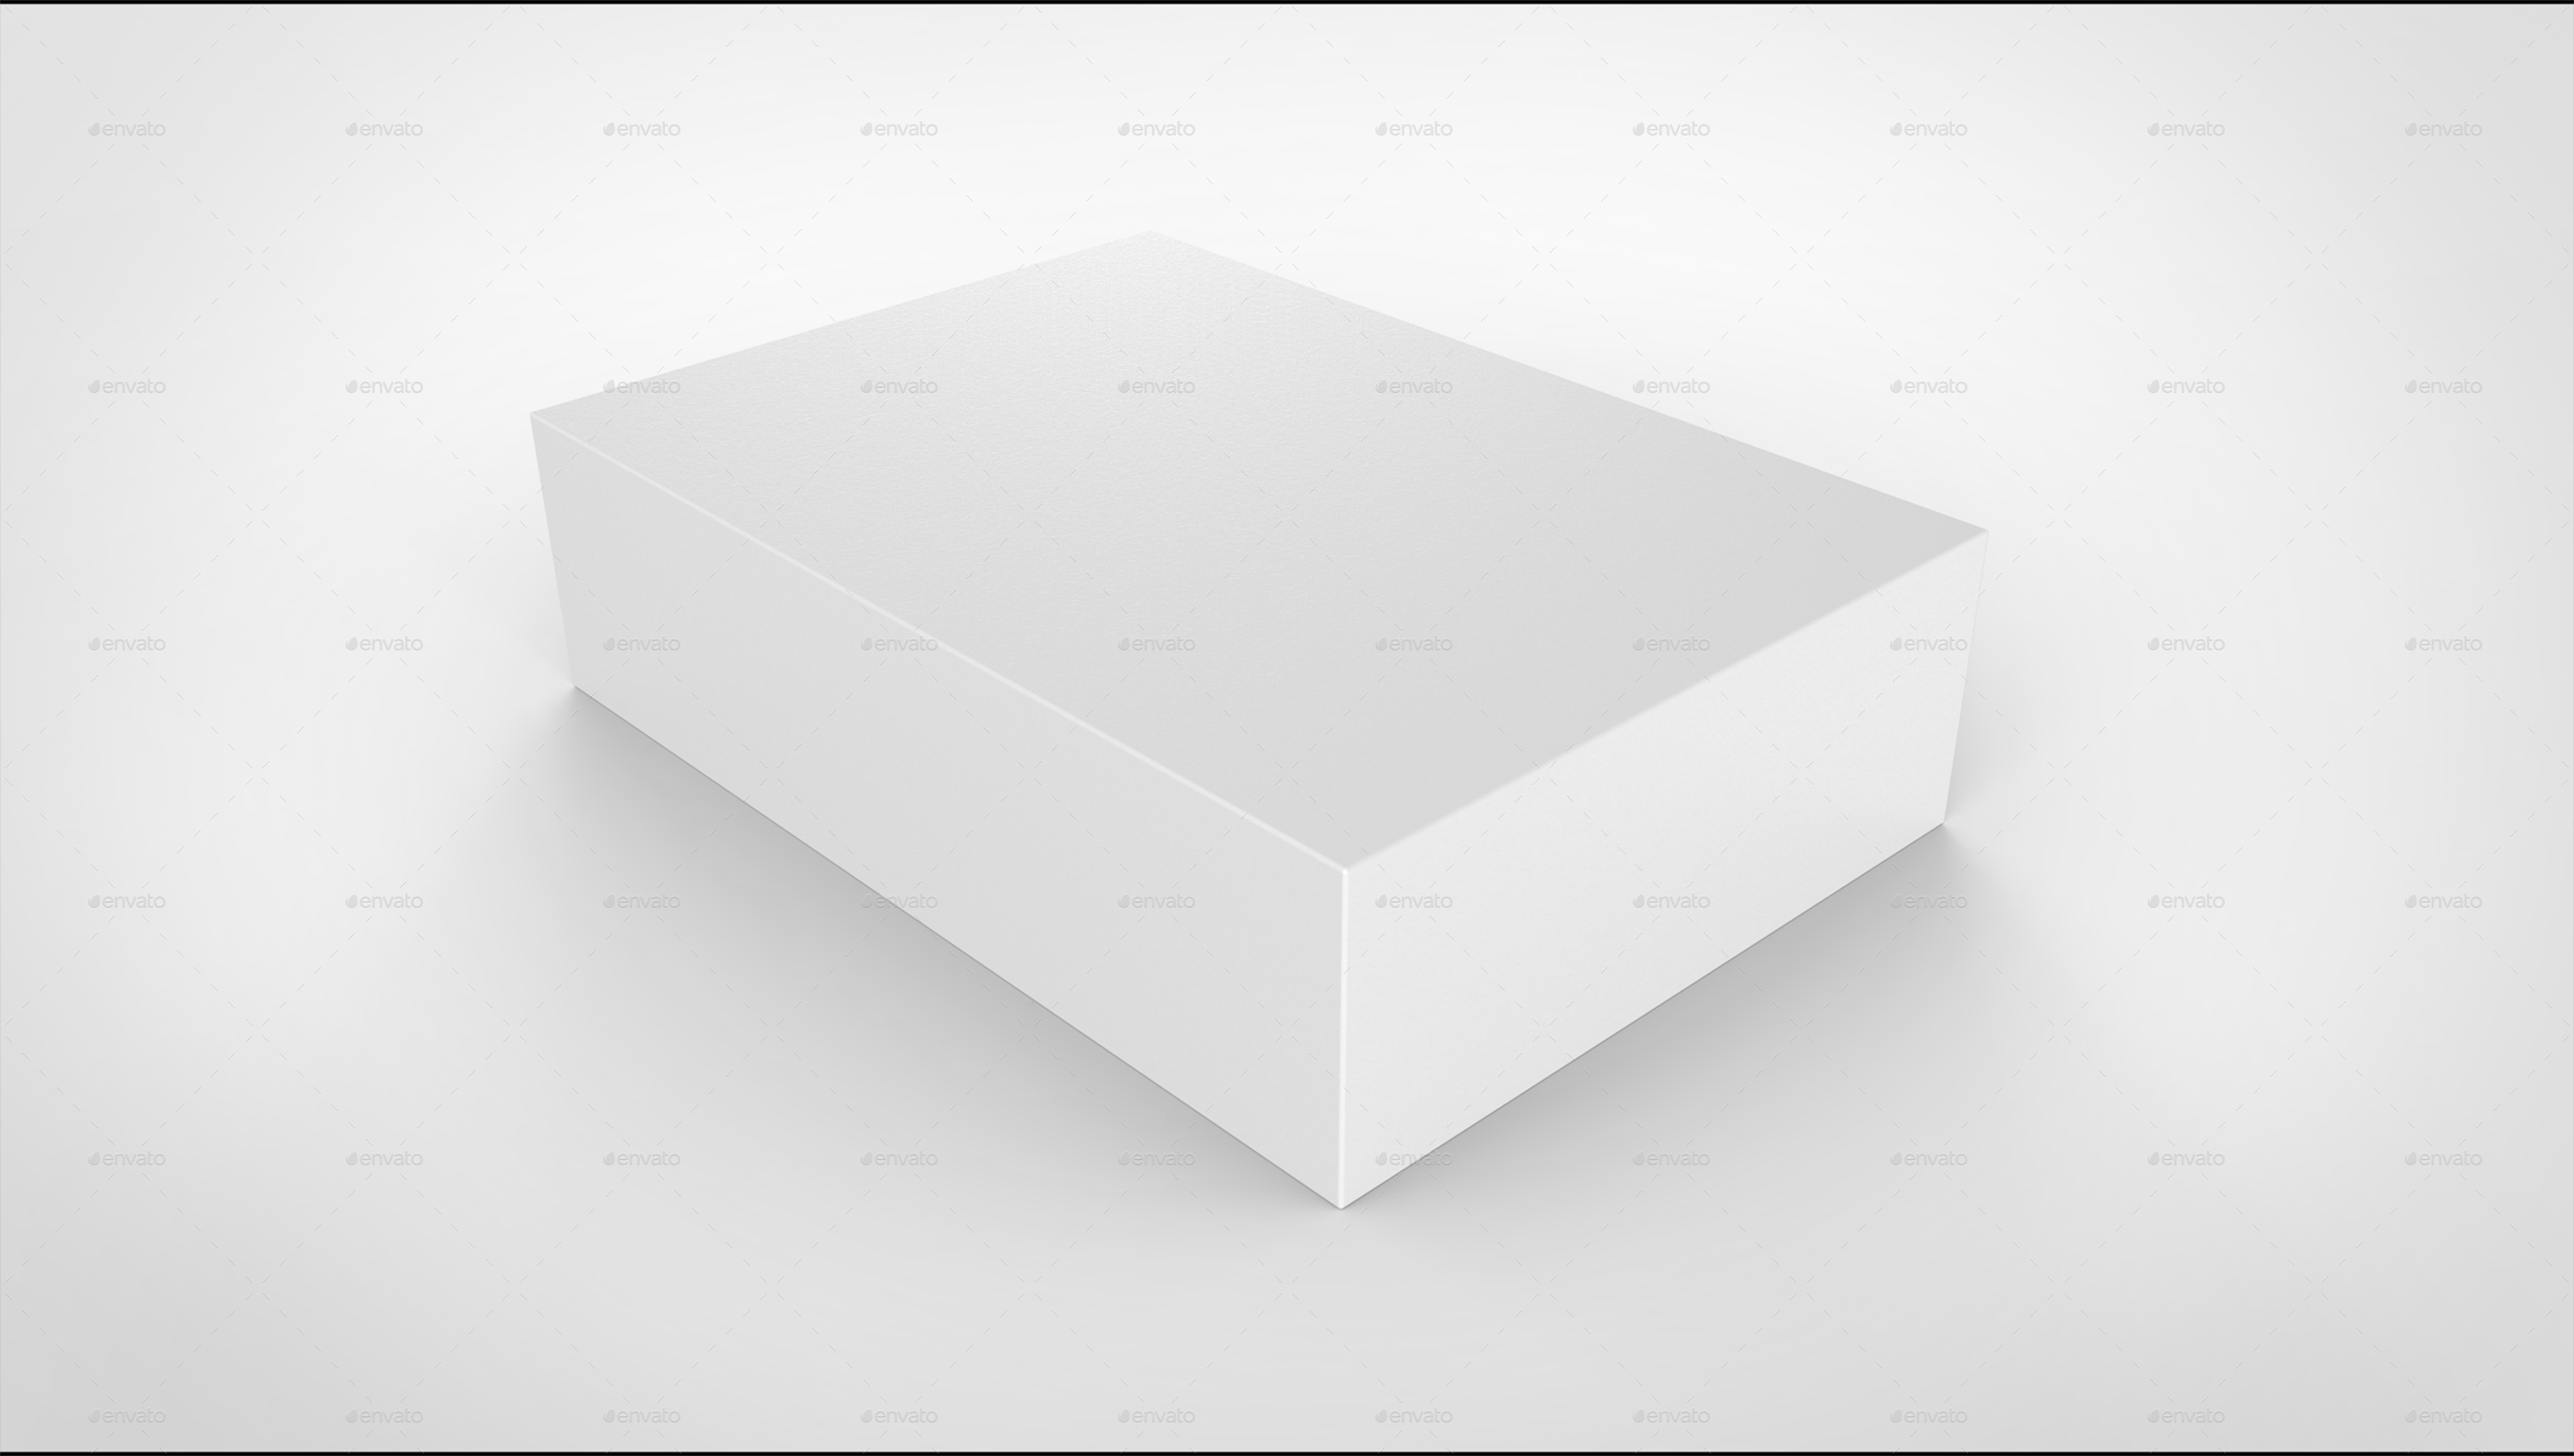 3D Box Mock Up by jimmybdesign | GraphicRiver